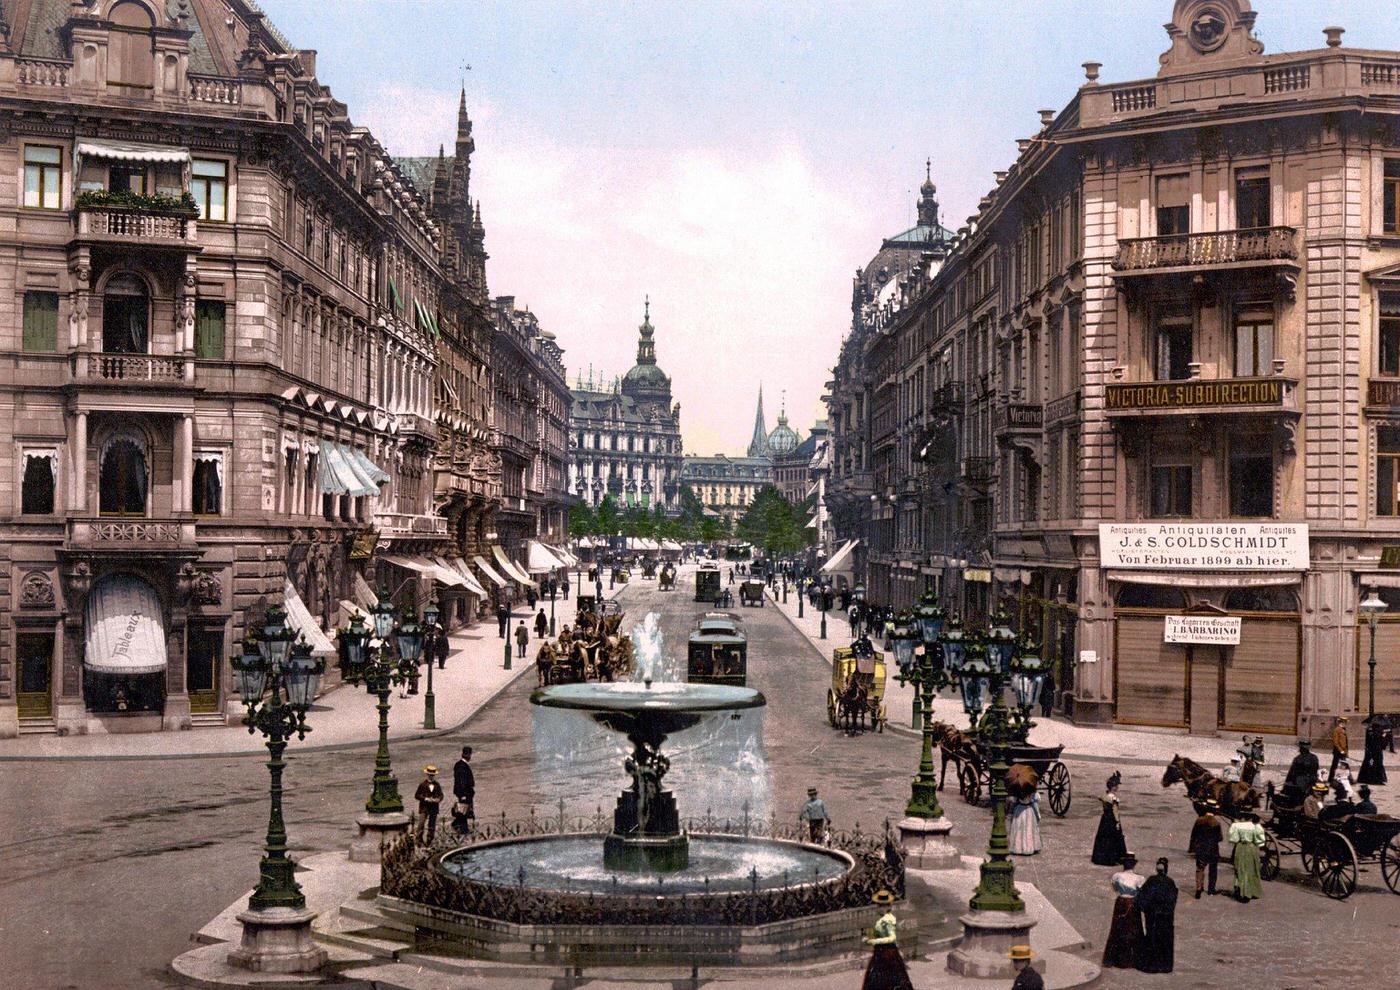 Street scene in Kaiserstrasse, Frankfurt, Germany, 1890s